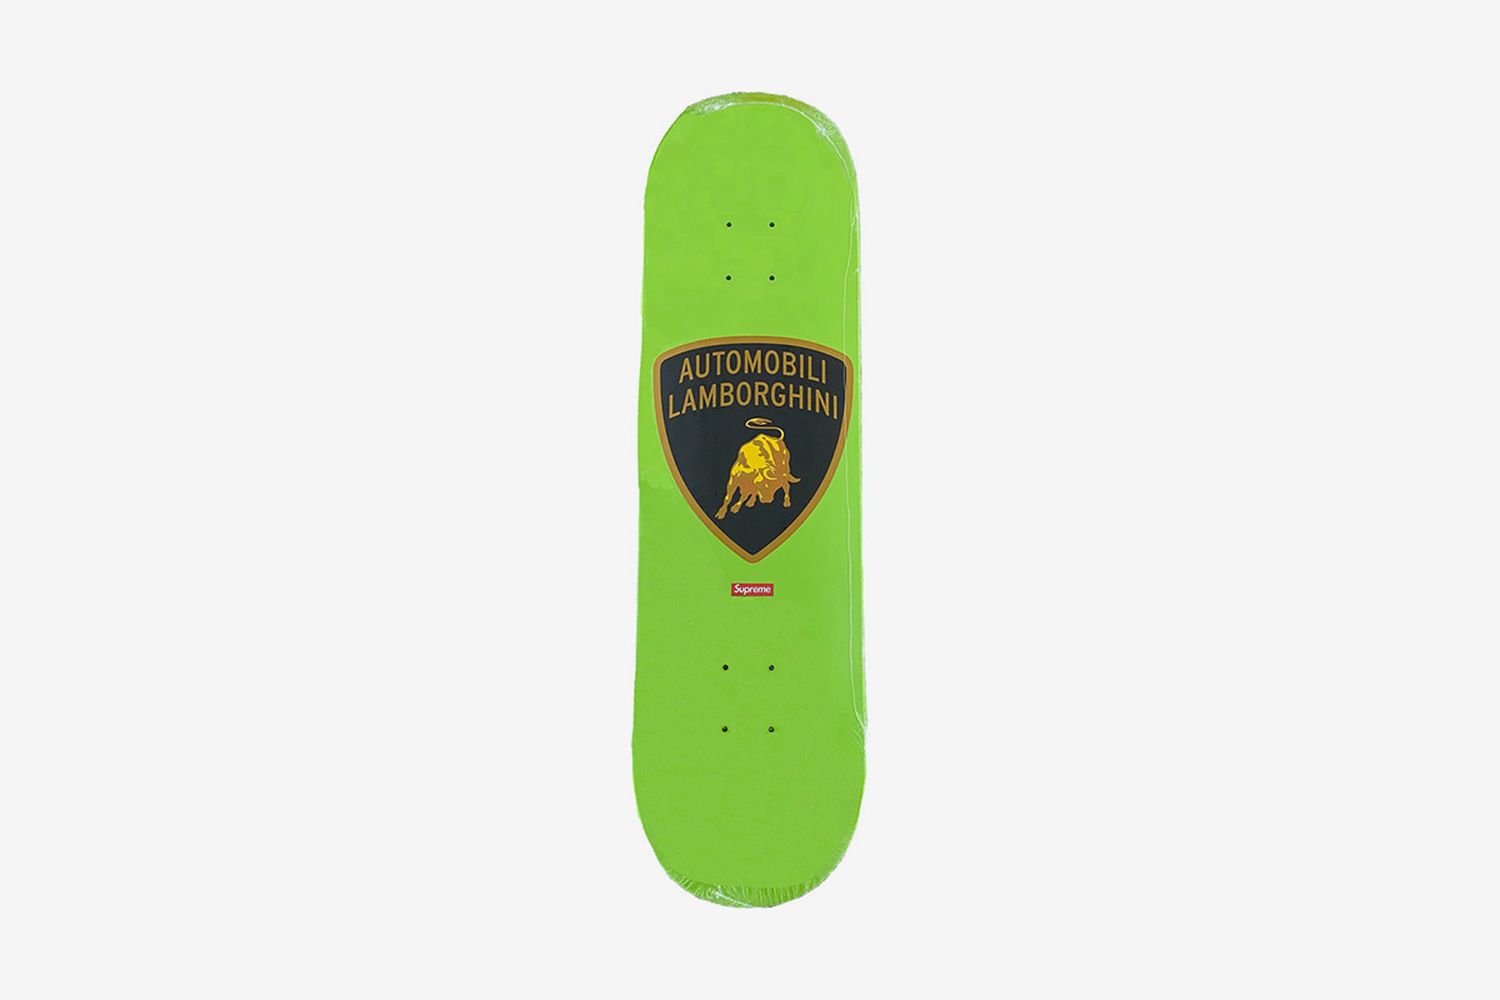 Automobili Lamborghini Skateboard Deck